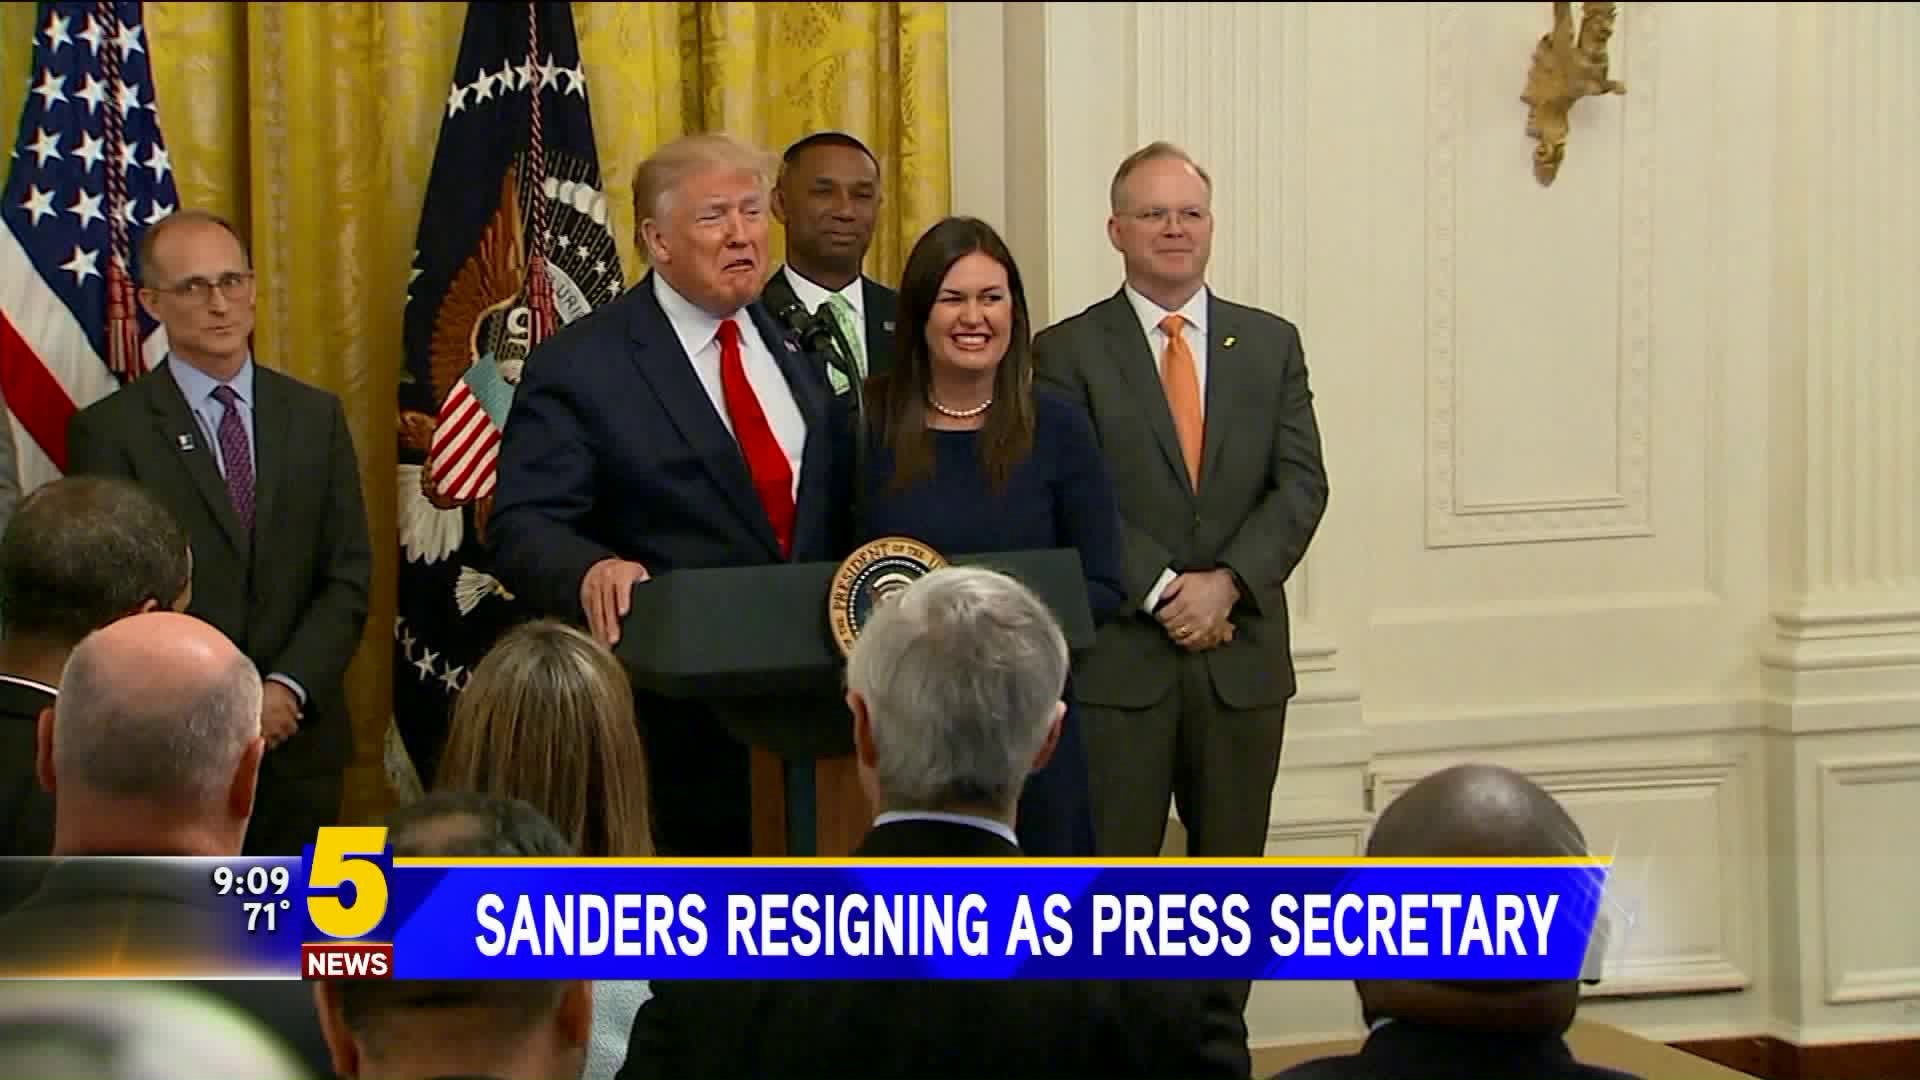 Sanders Resigning as Press Secretary